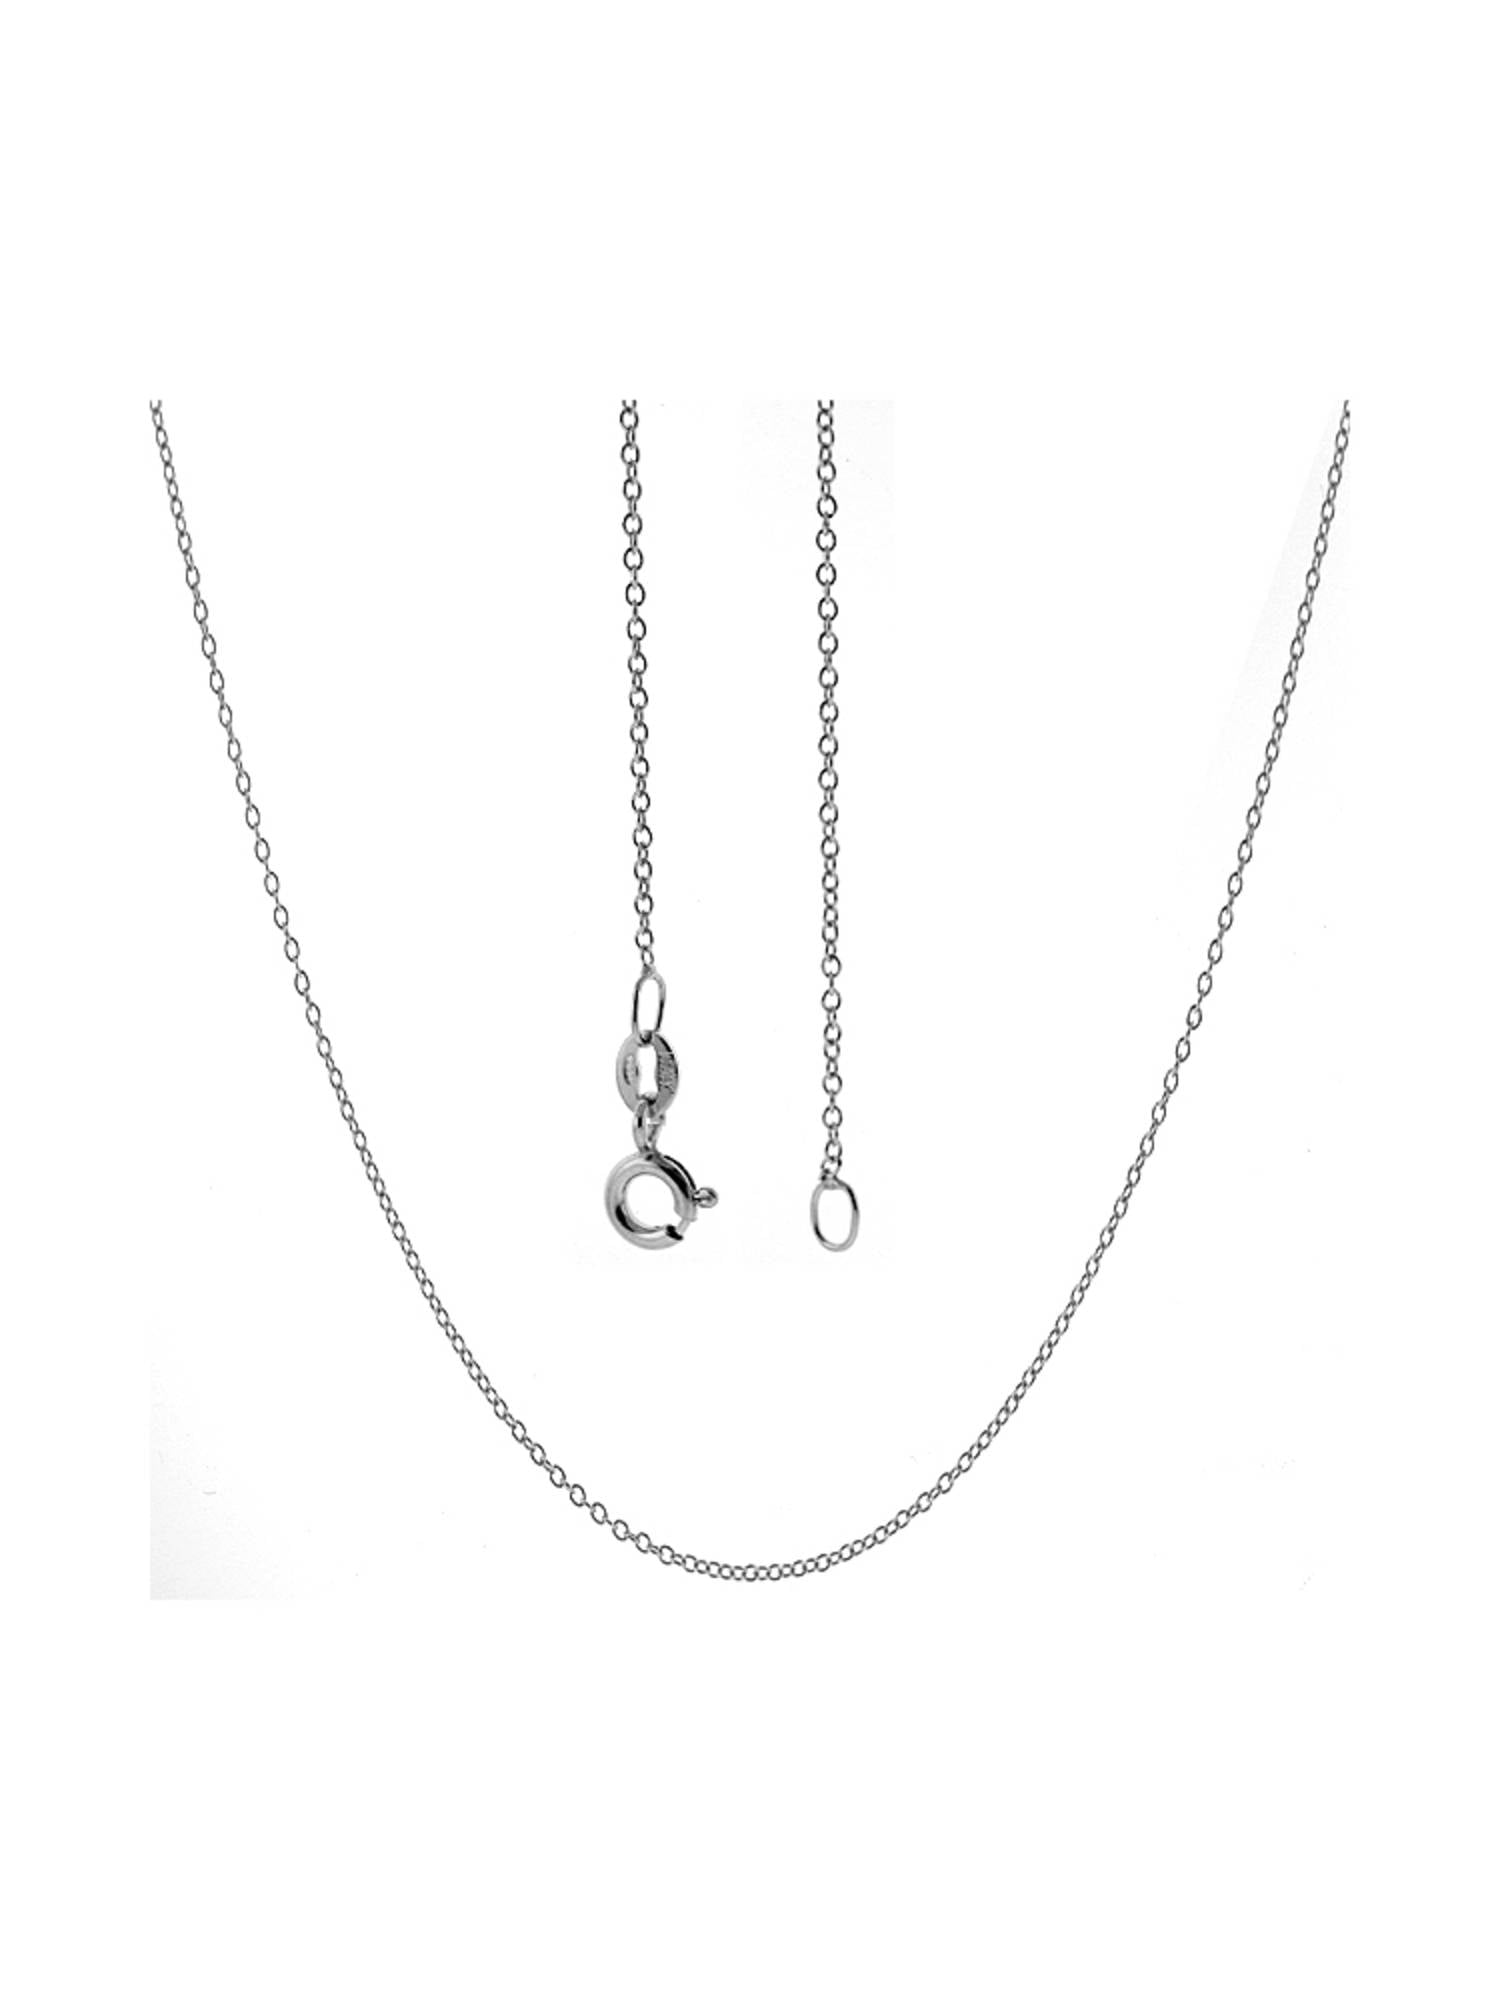 40 pcs Sterling Silver Fine Cable Chains Necklaces 18" 